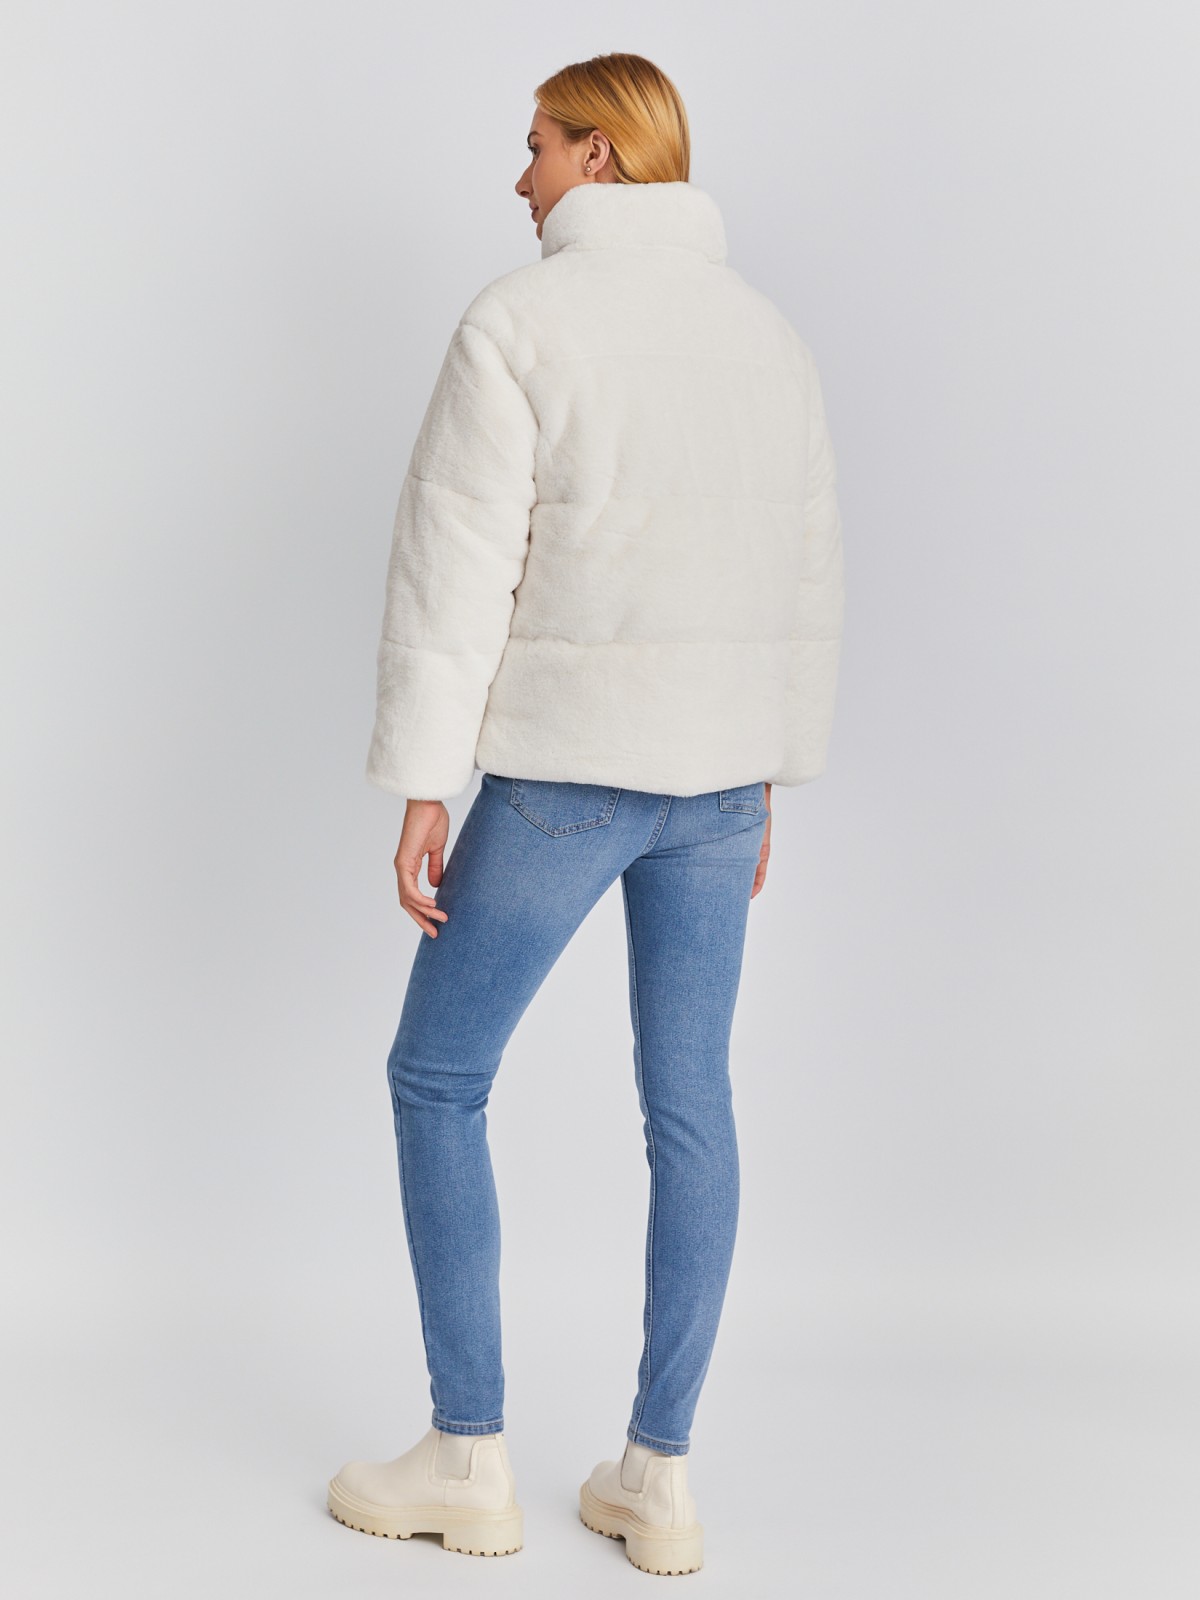 Короткая тёплая куртка-шуба из экомеха с утеплителем zolla 023345550014, цвет молоко, размер XS - фото 6